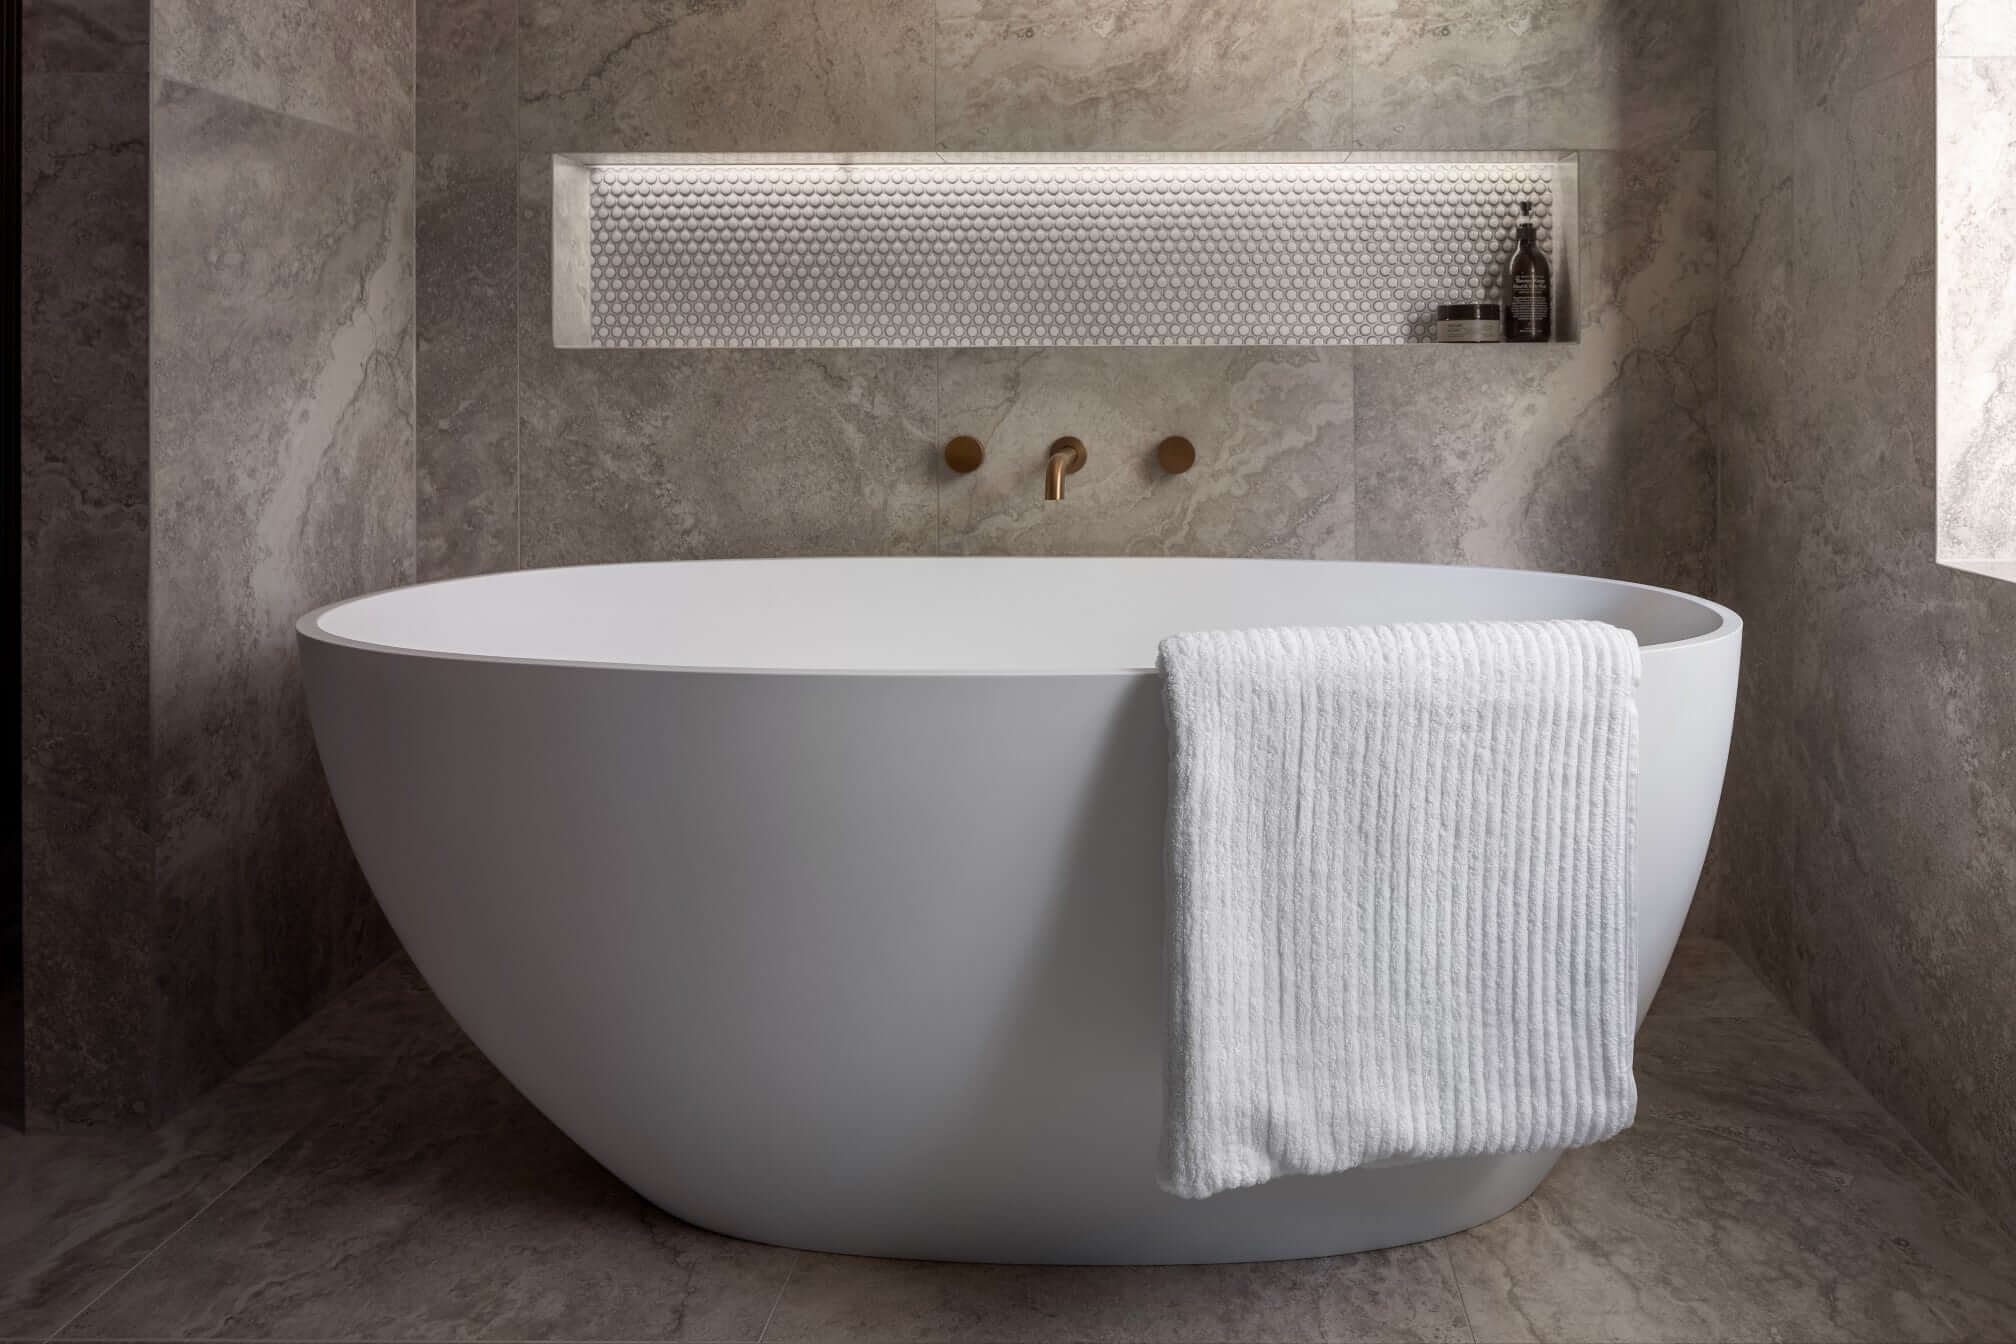 A photo of a Lux Interiors bathtub